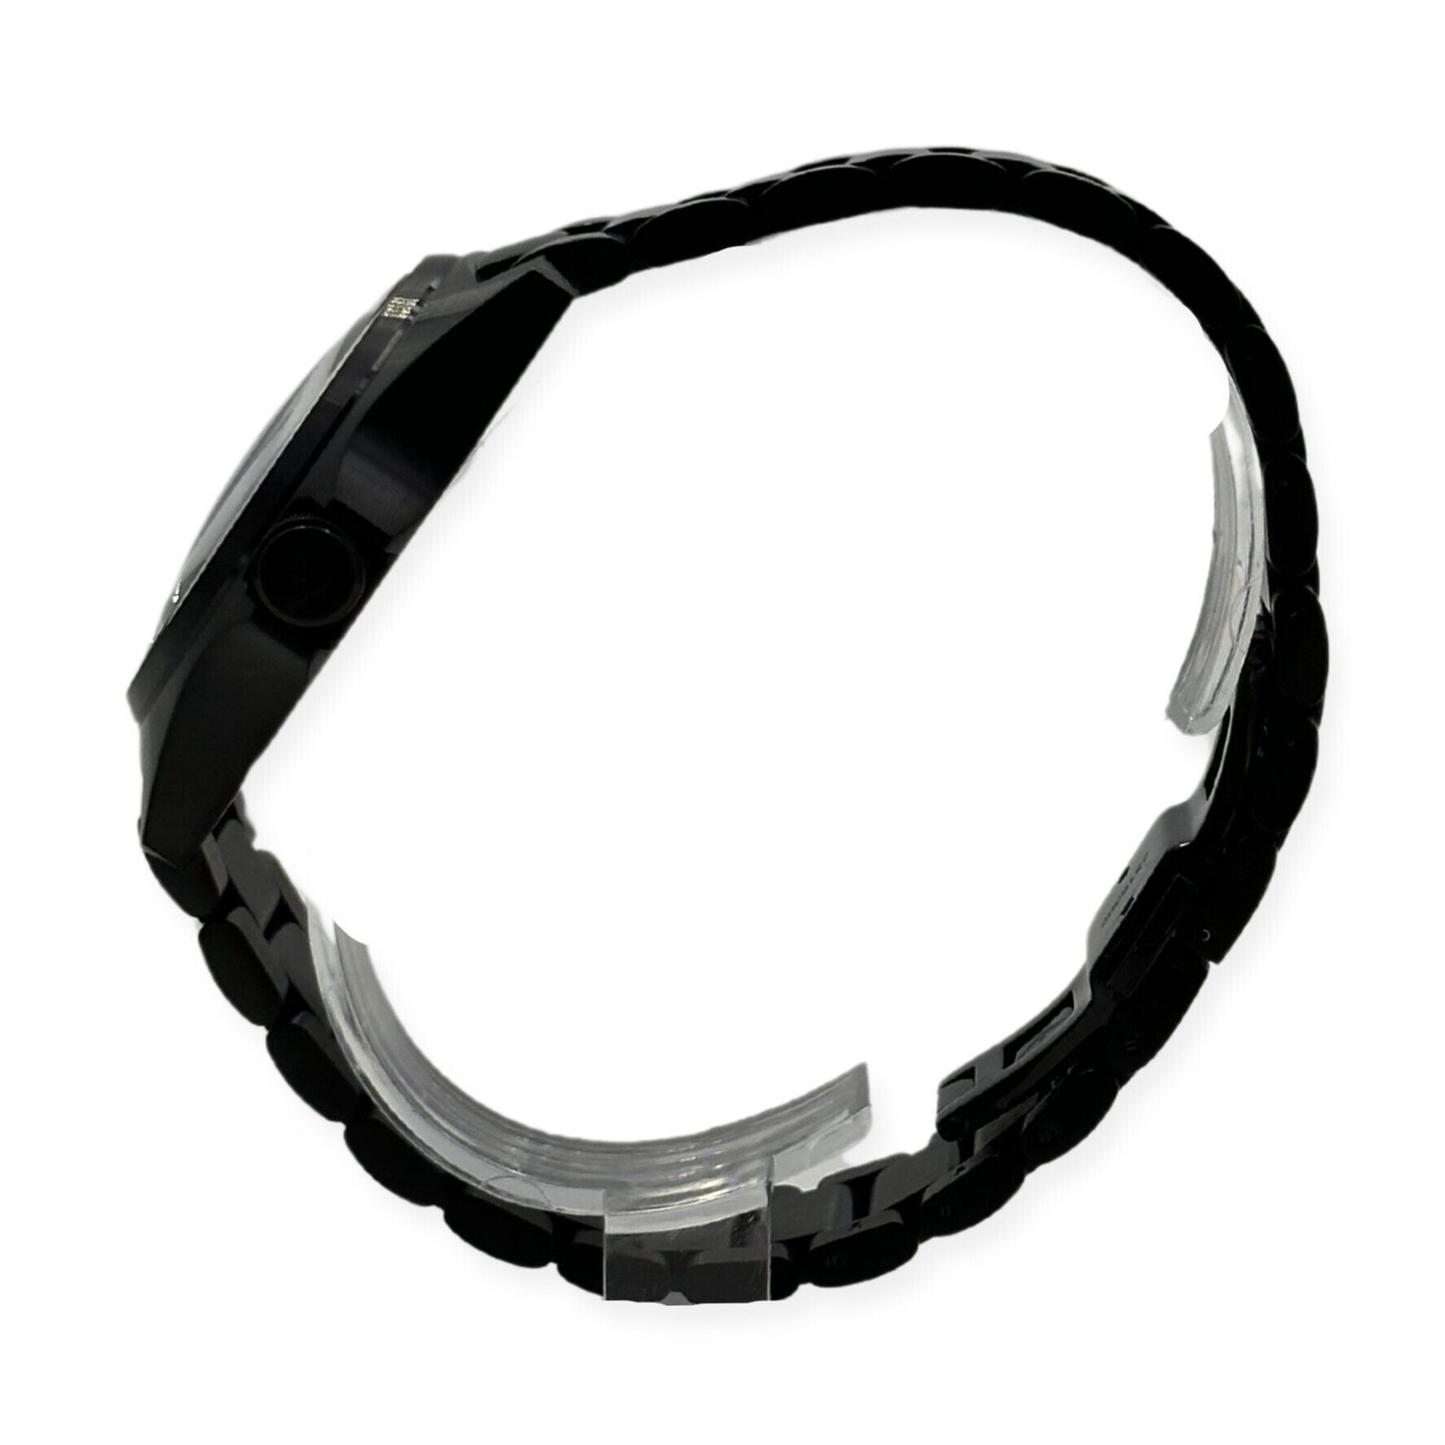 Emporio Armani Men's Three-Hand Black-Tone Stainless Steel Watch - AR11257 - 723763282567 